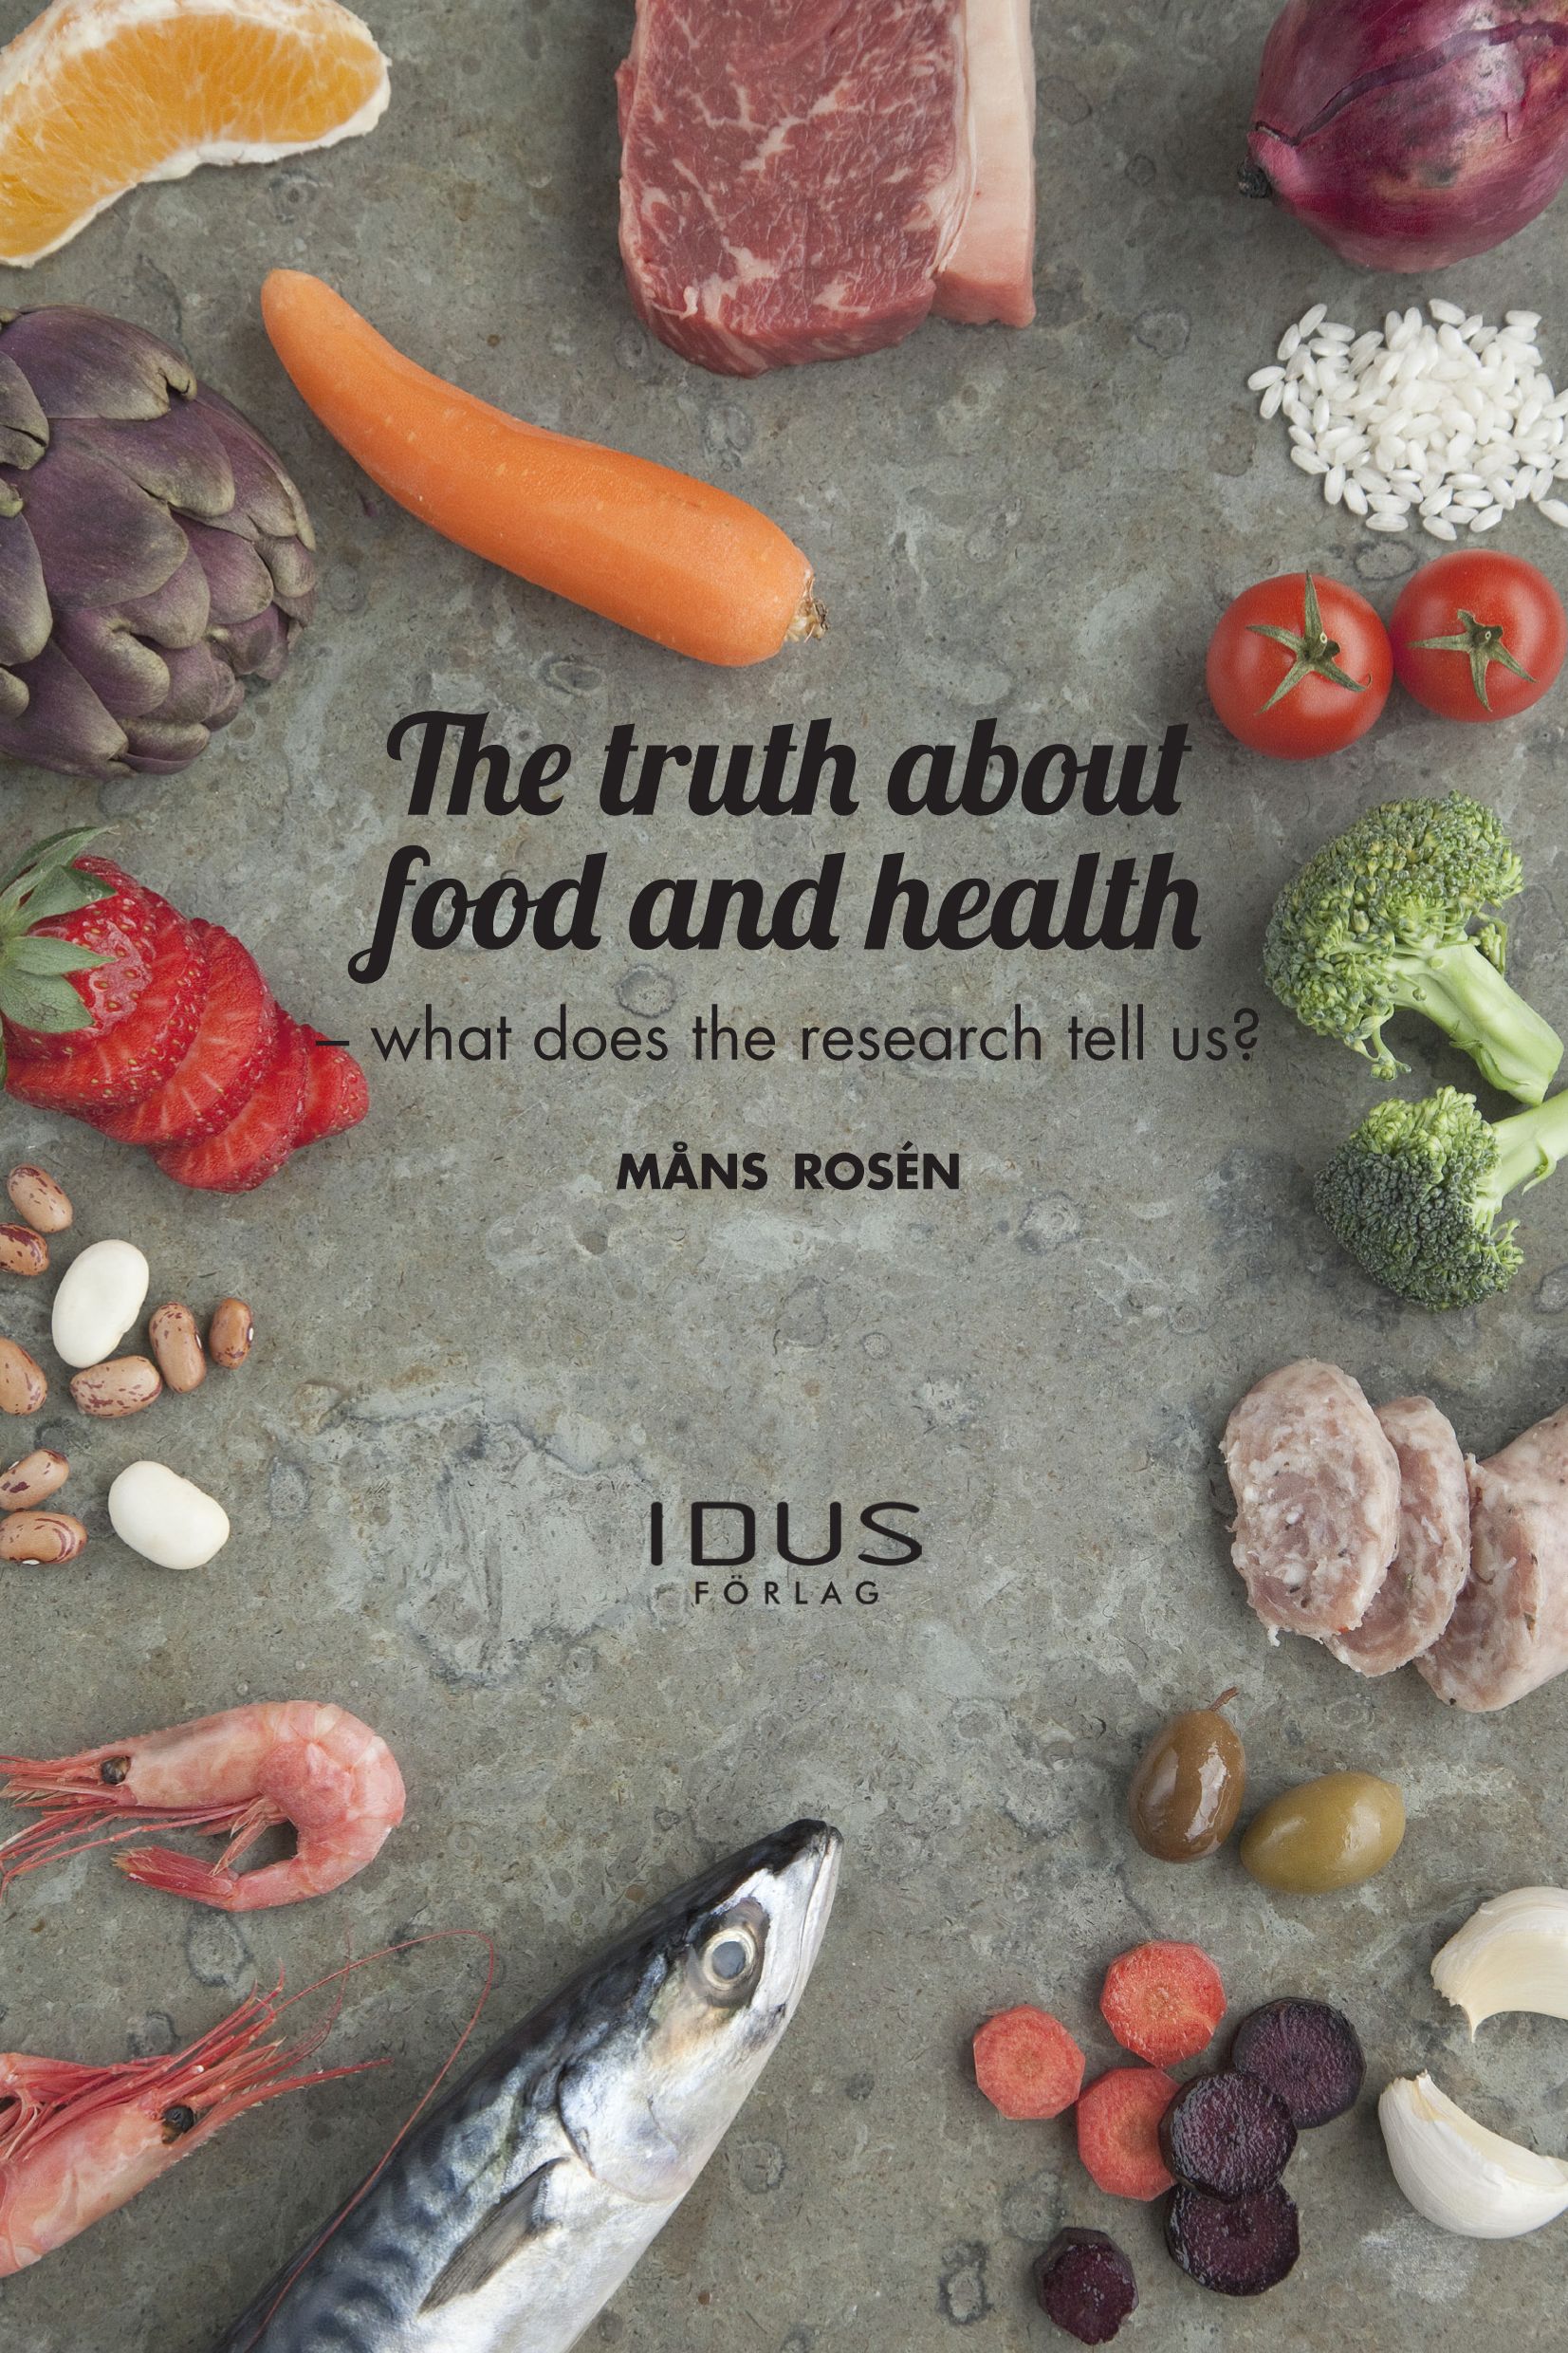 The truth about food and health, e-bog af Måns Rosen